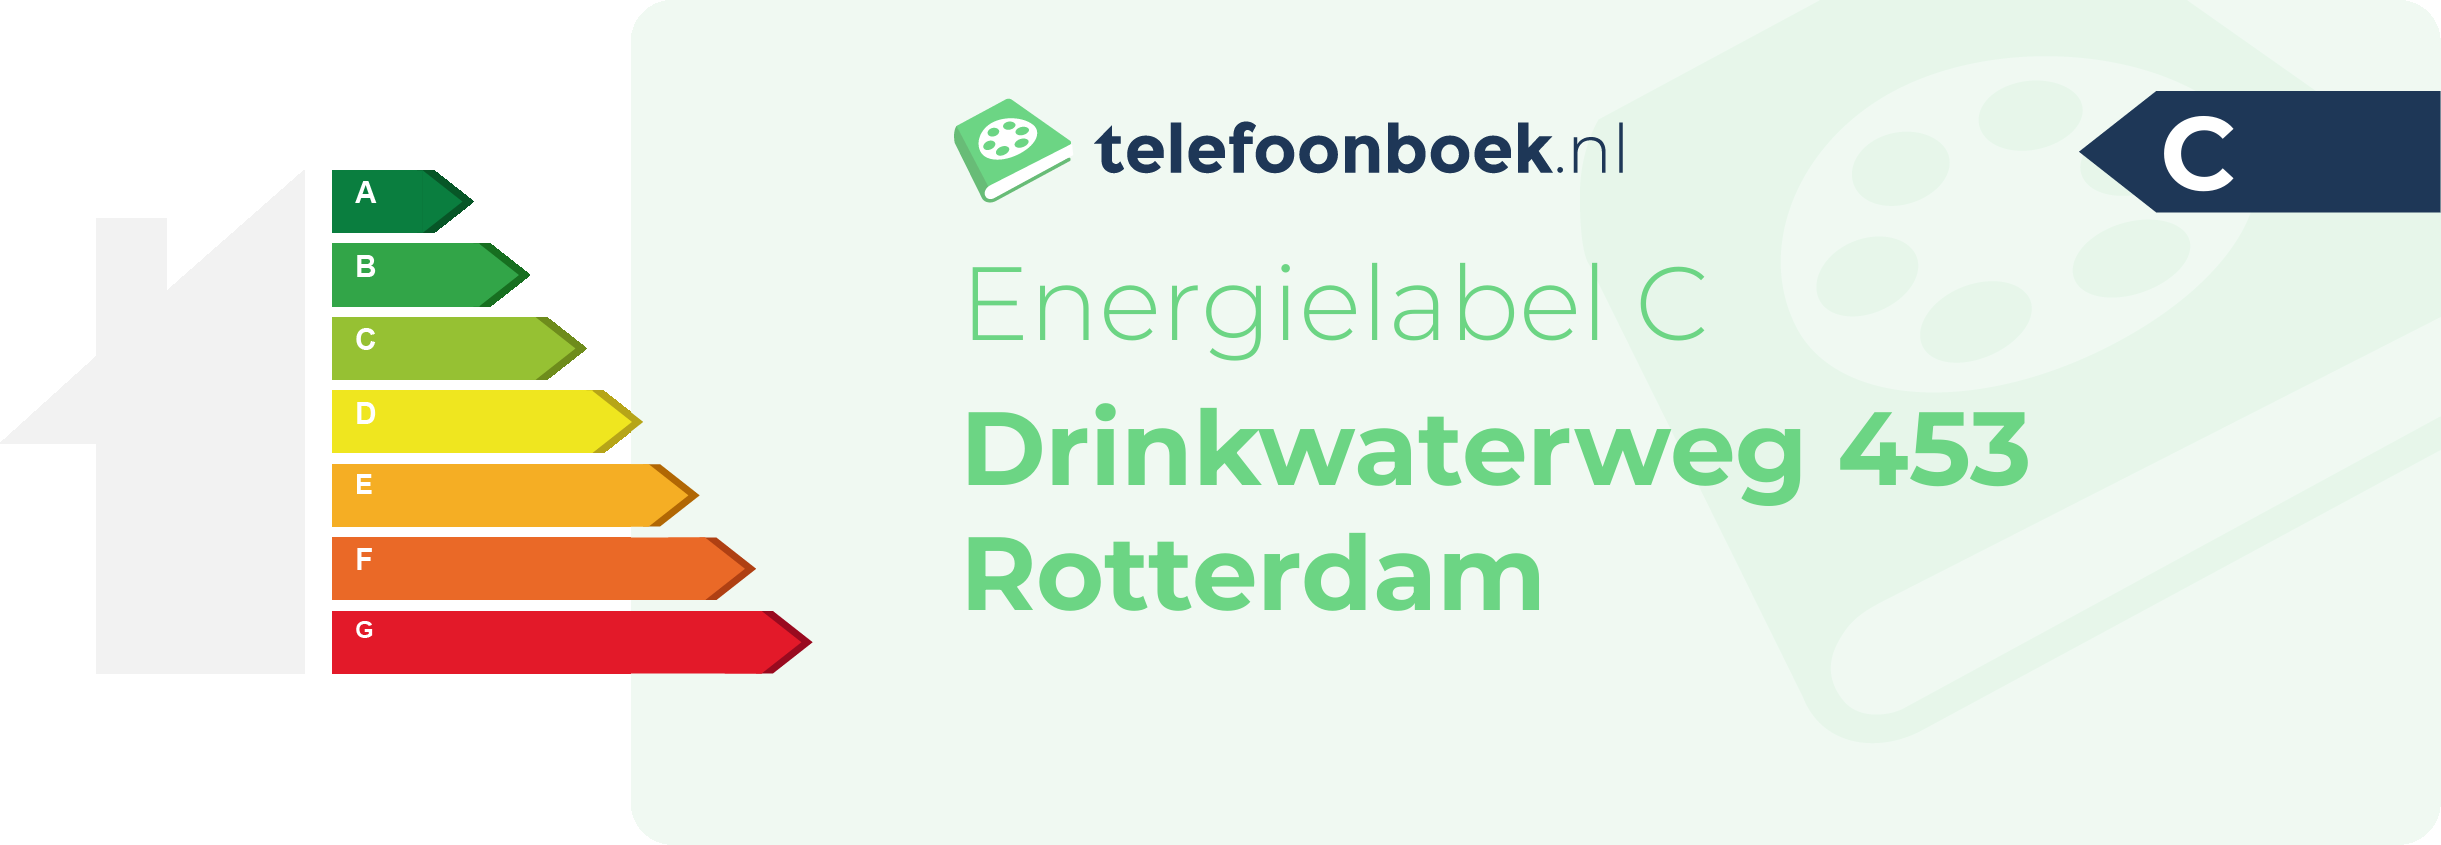 Energielabel Drinkwaterweg 453 Rotterdam